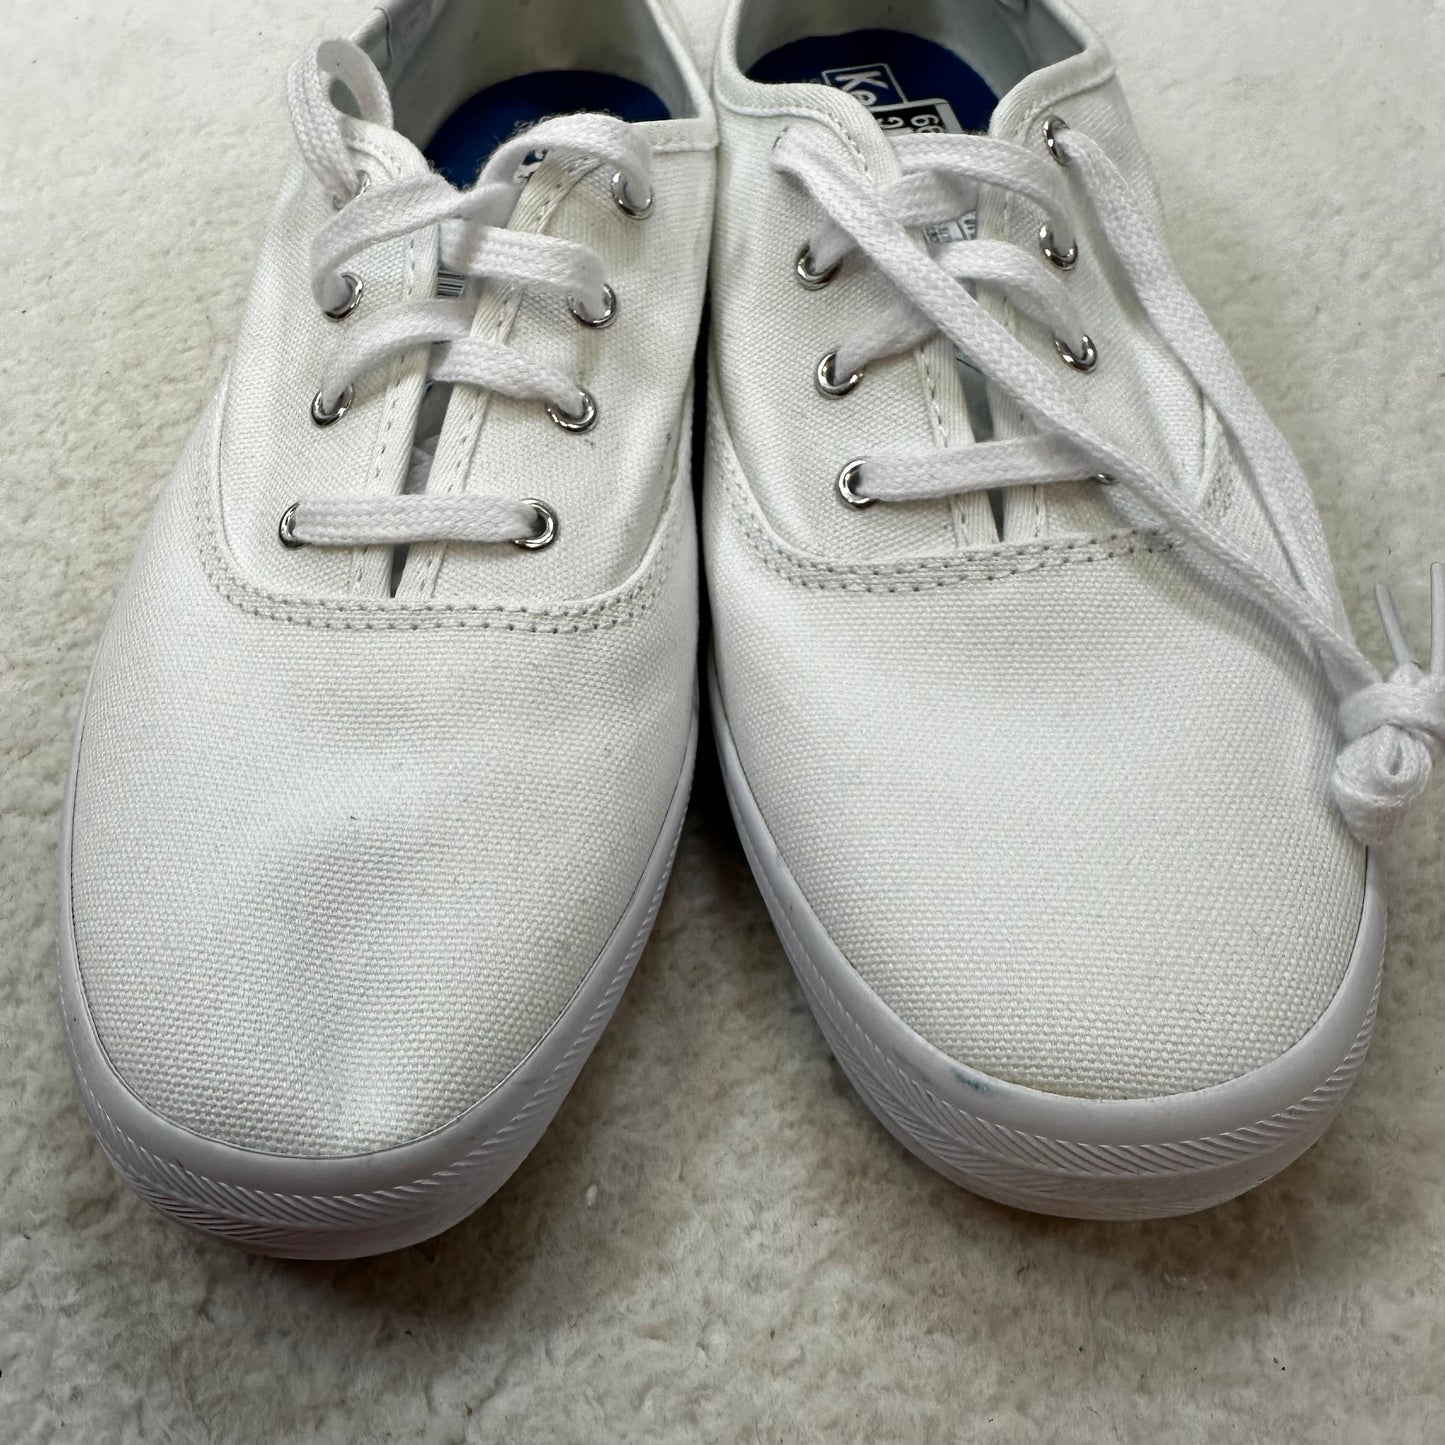 White Shoes Flats Ballet Keds, Size 10